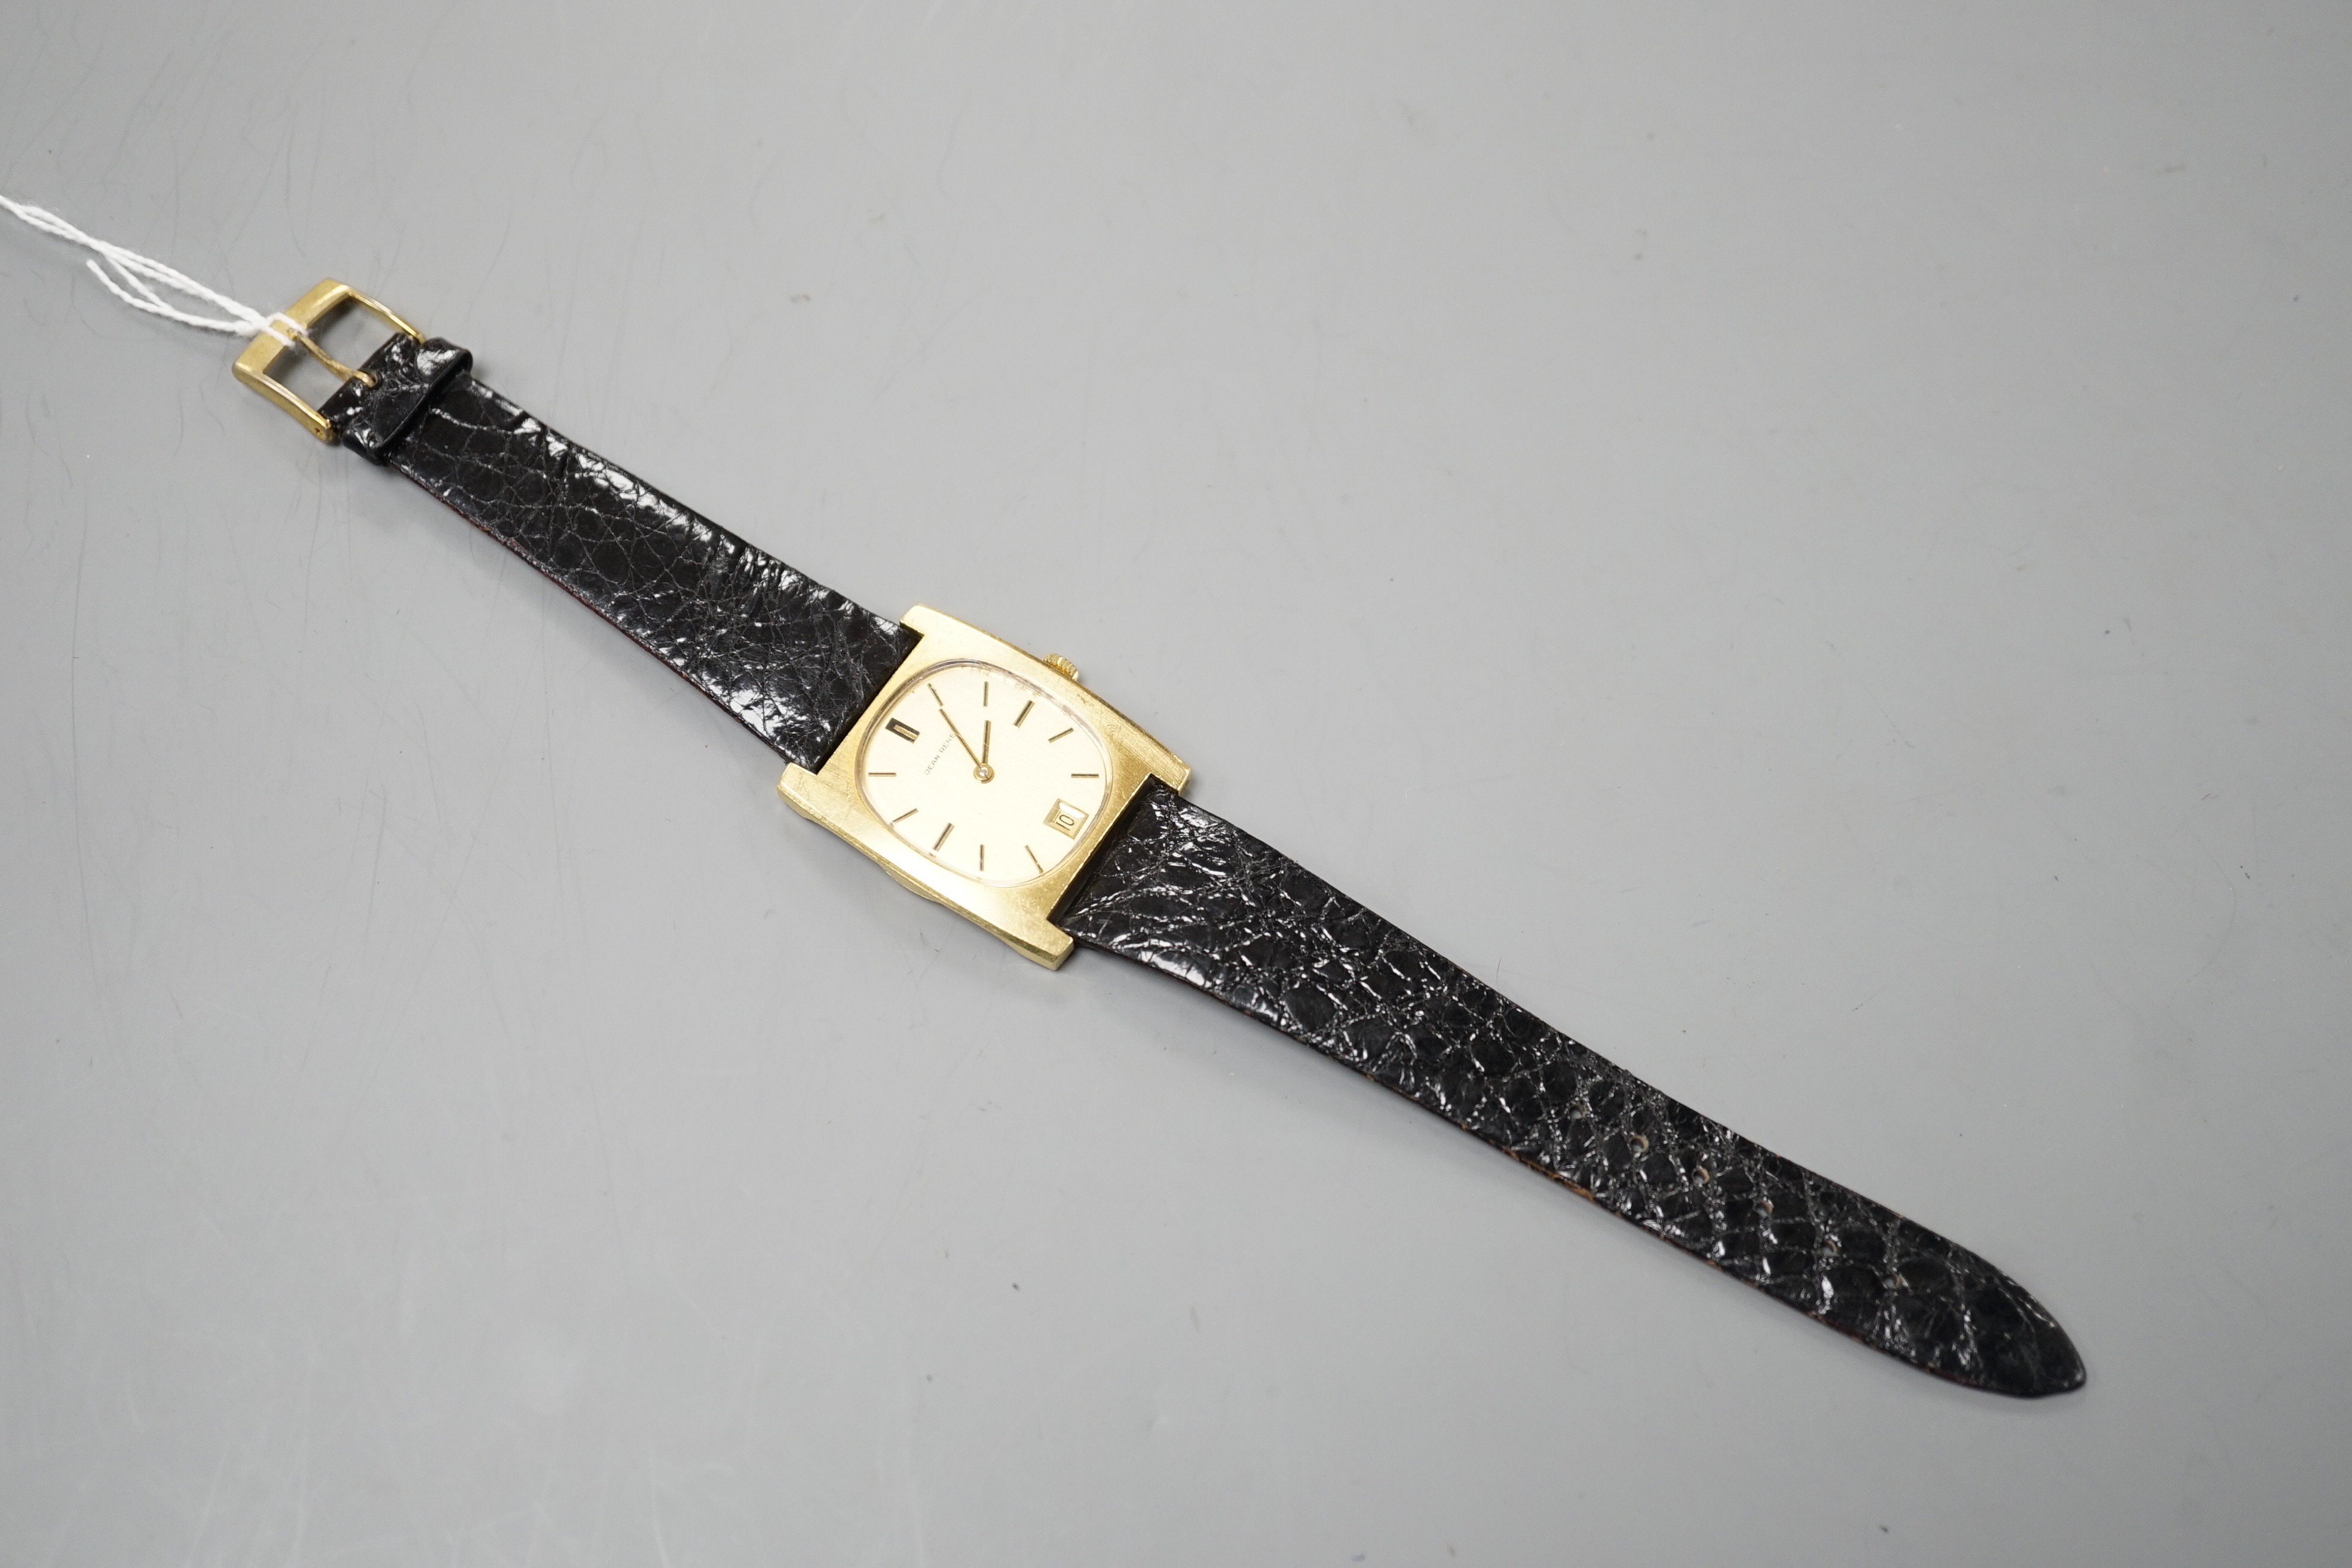 A gentleman's modern 18k Jean Renet manual wind wrist watch, on associated leather strap, case diameter 30mm, gross weight 31.6 grams.